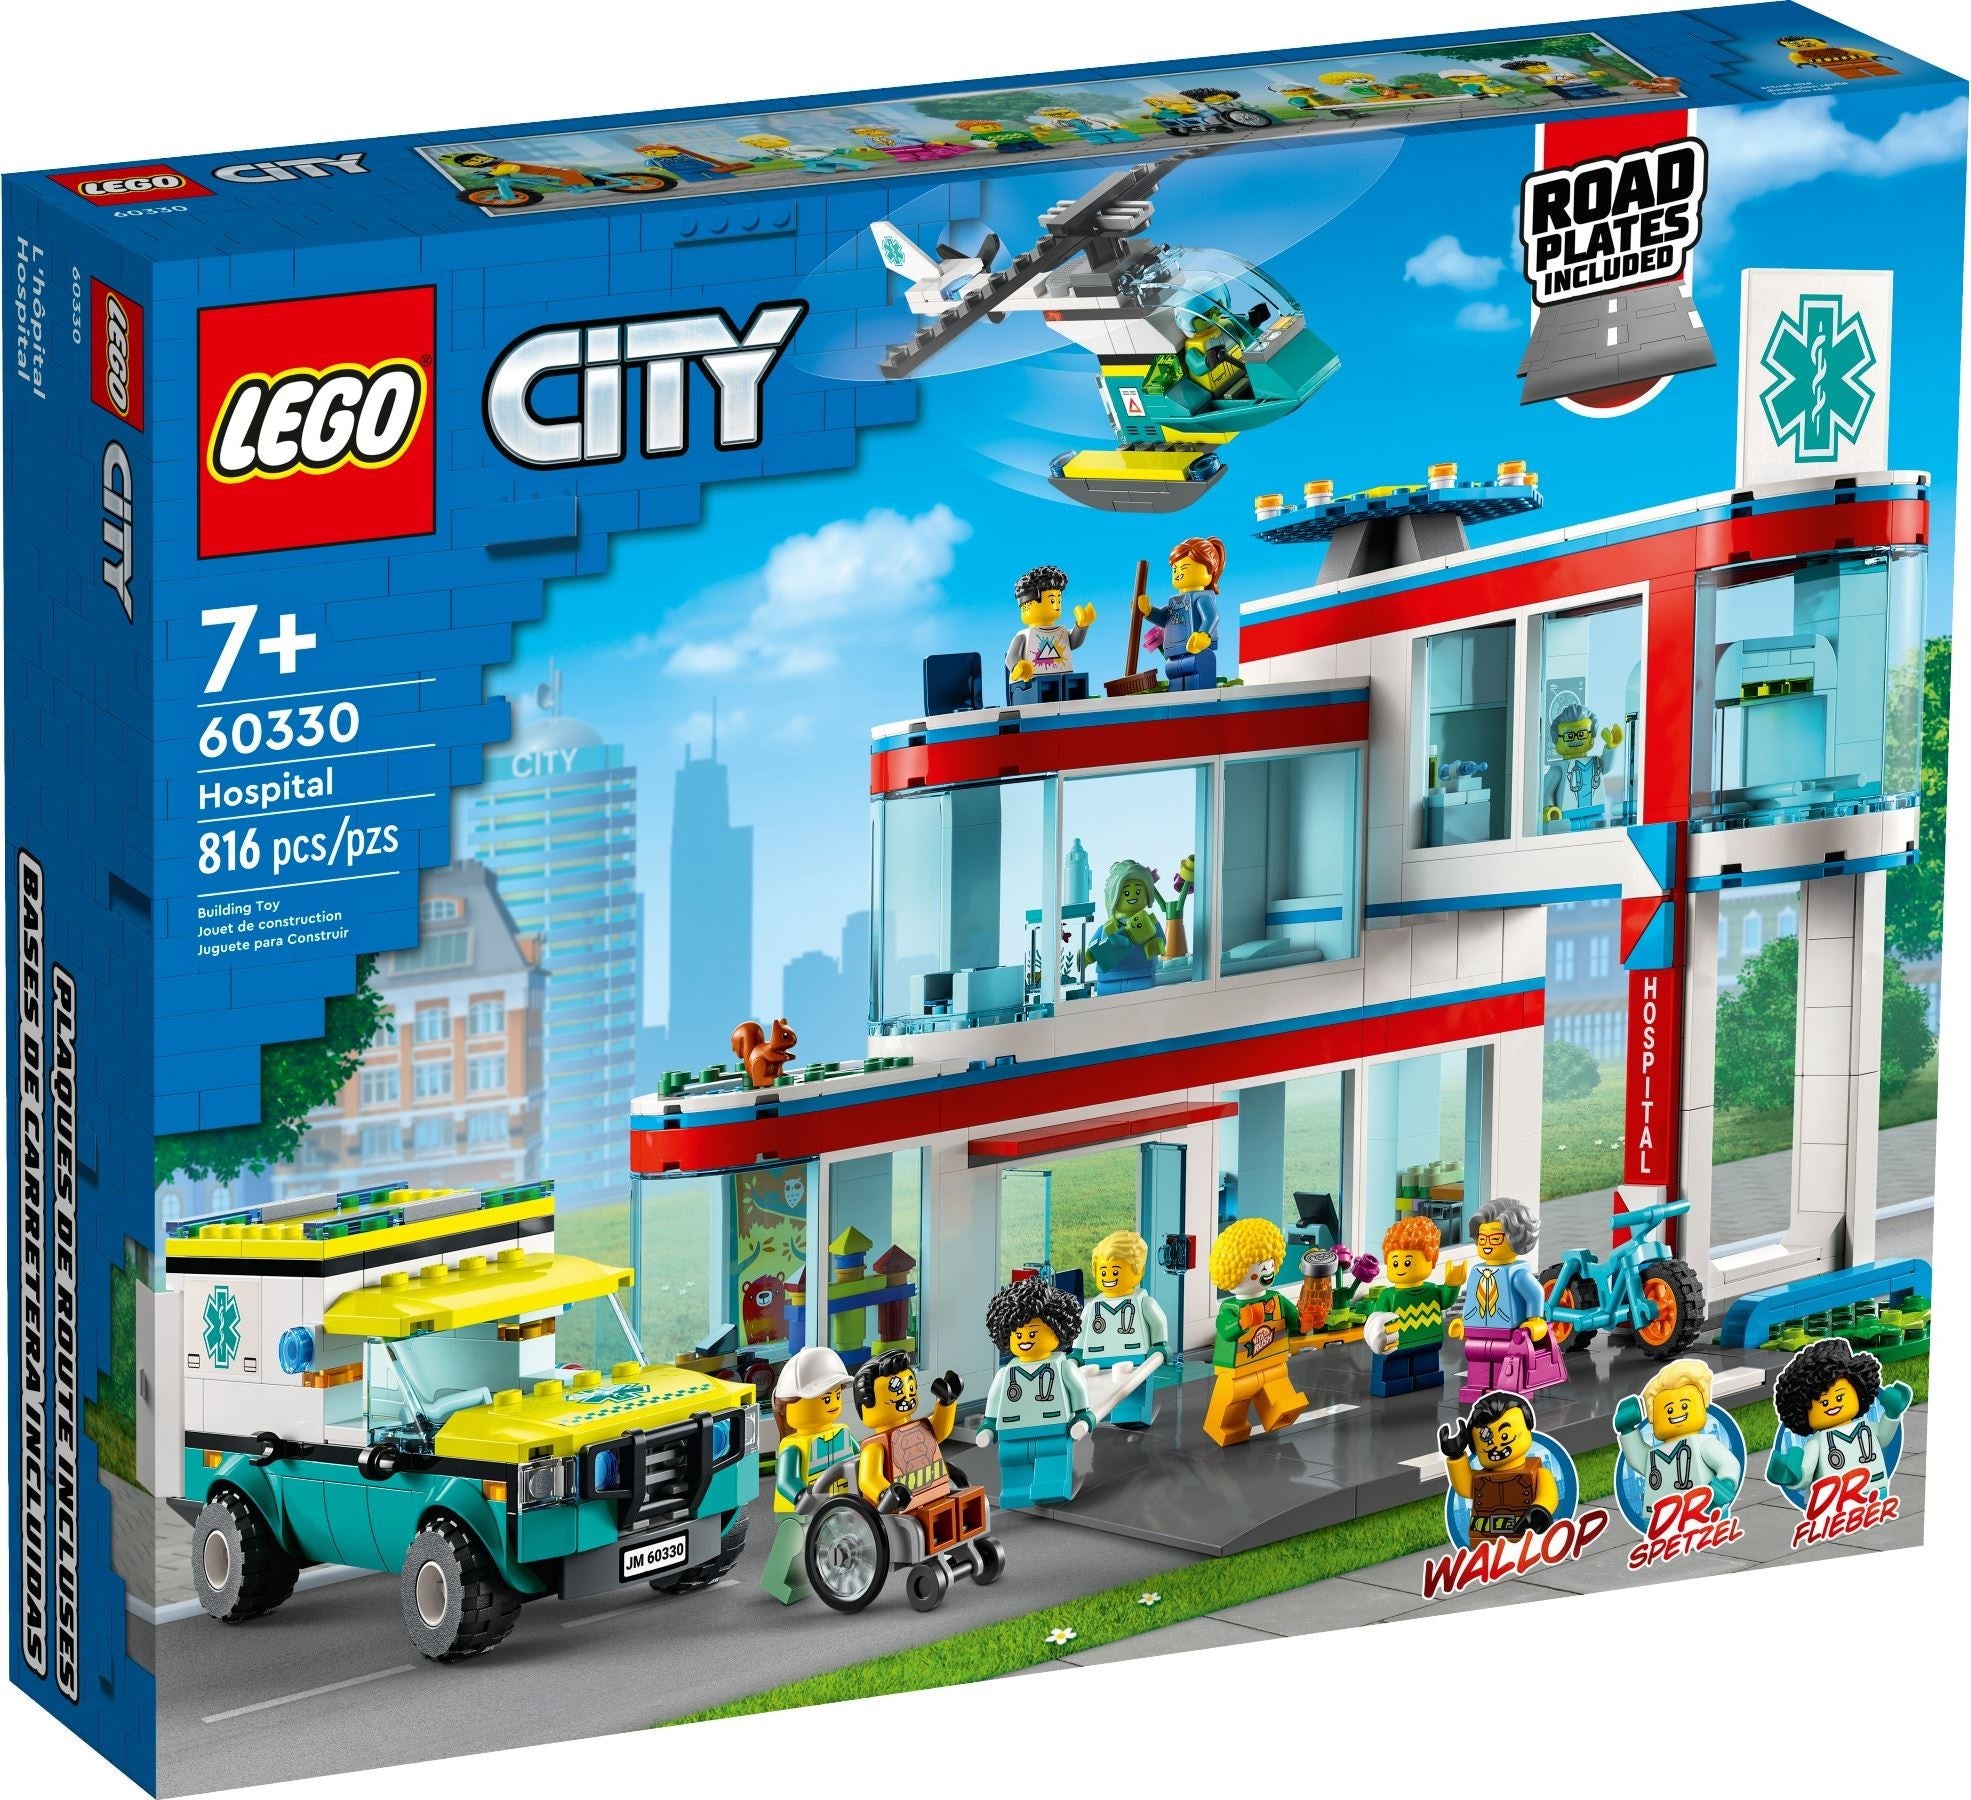 Lego City 60330 - Hospital